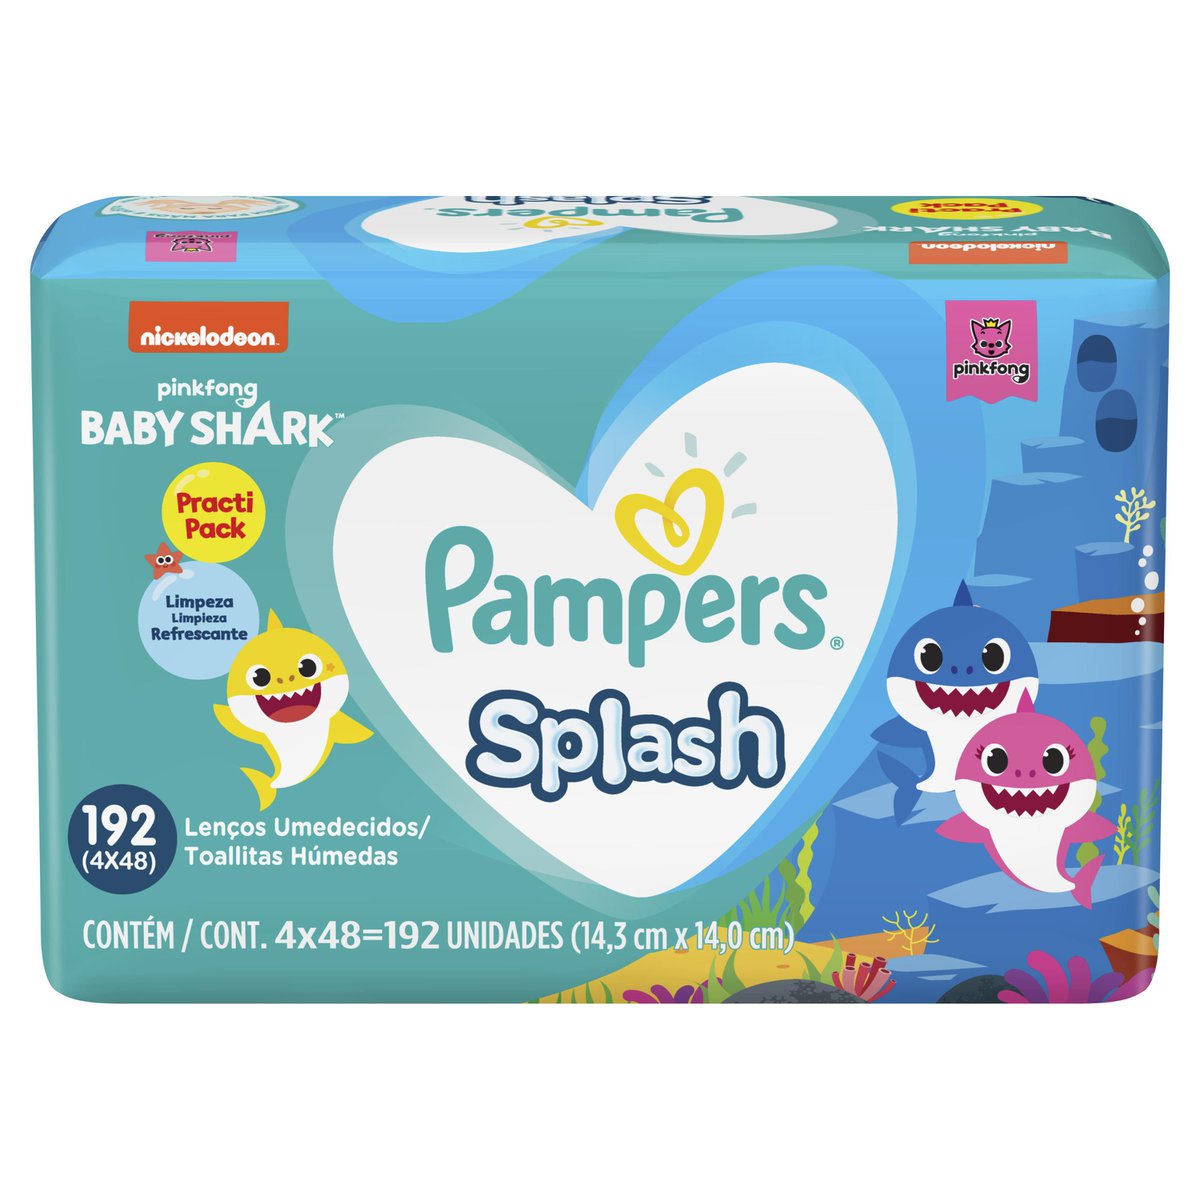 lencos-umedecidos-pampers-splashers-baby-shark-192-unidades-1.jpg